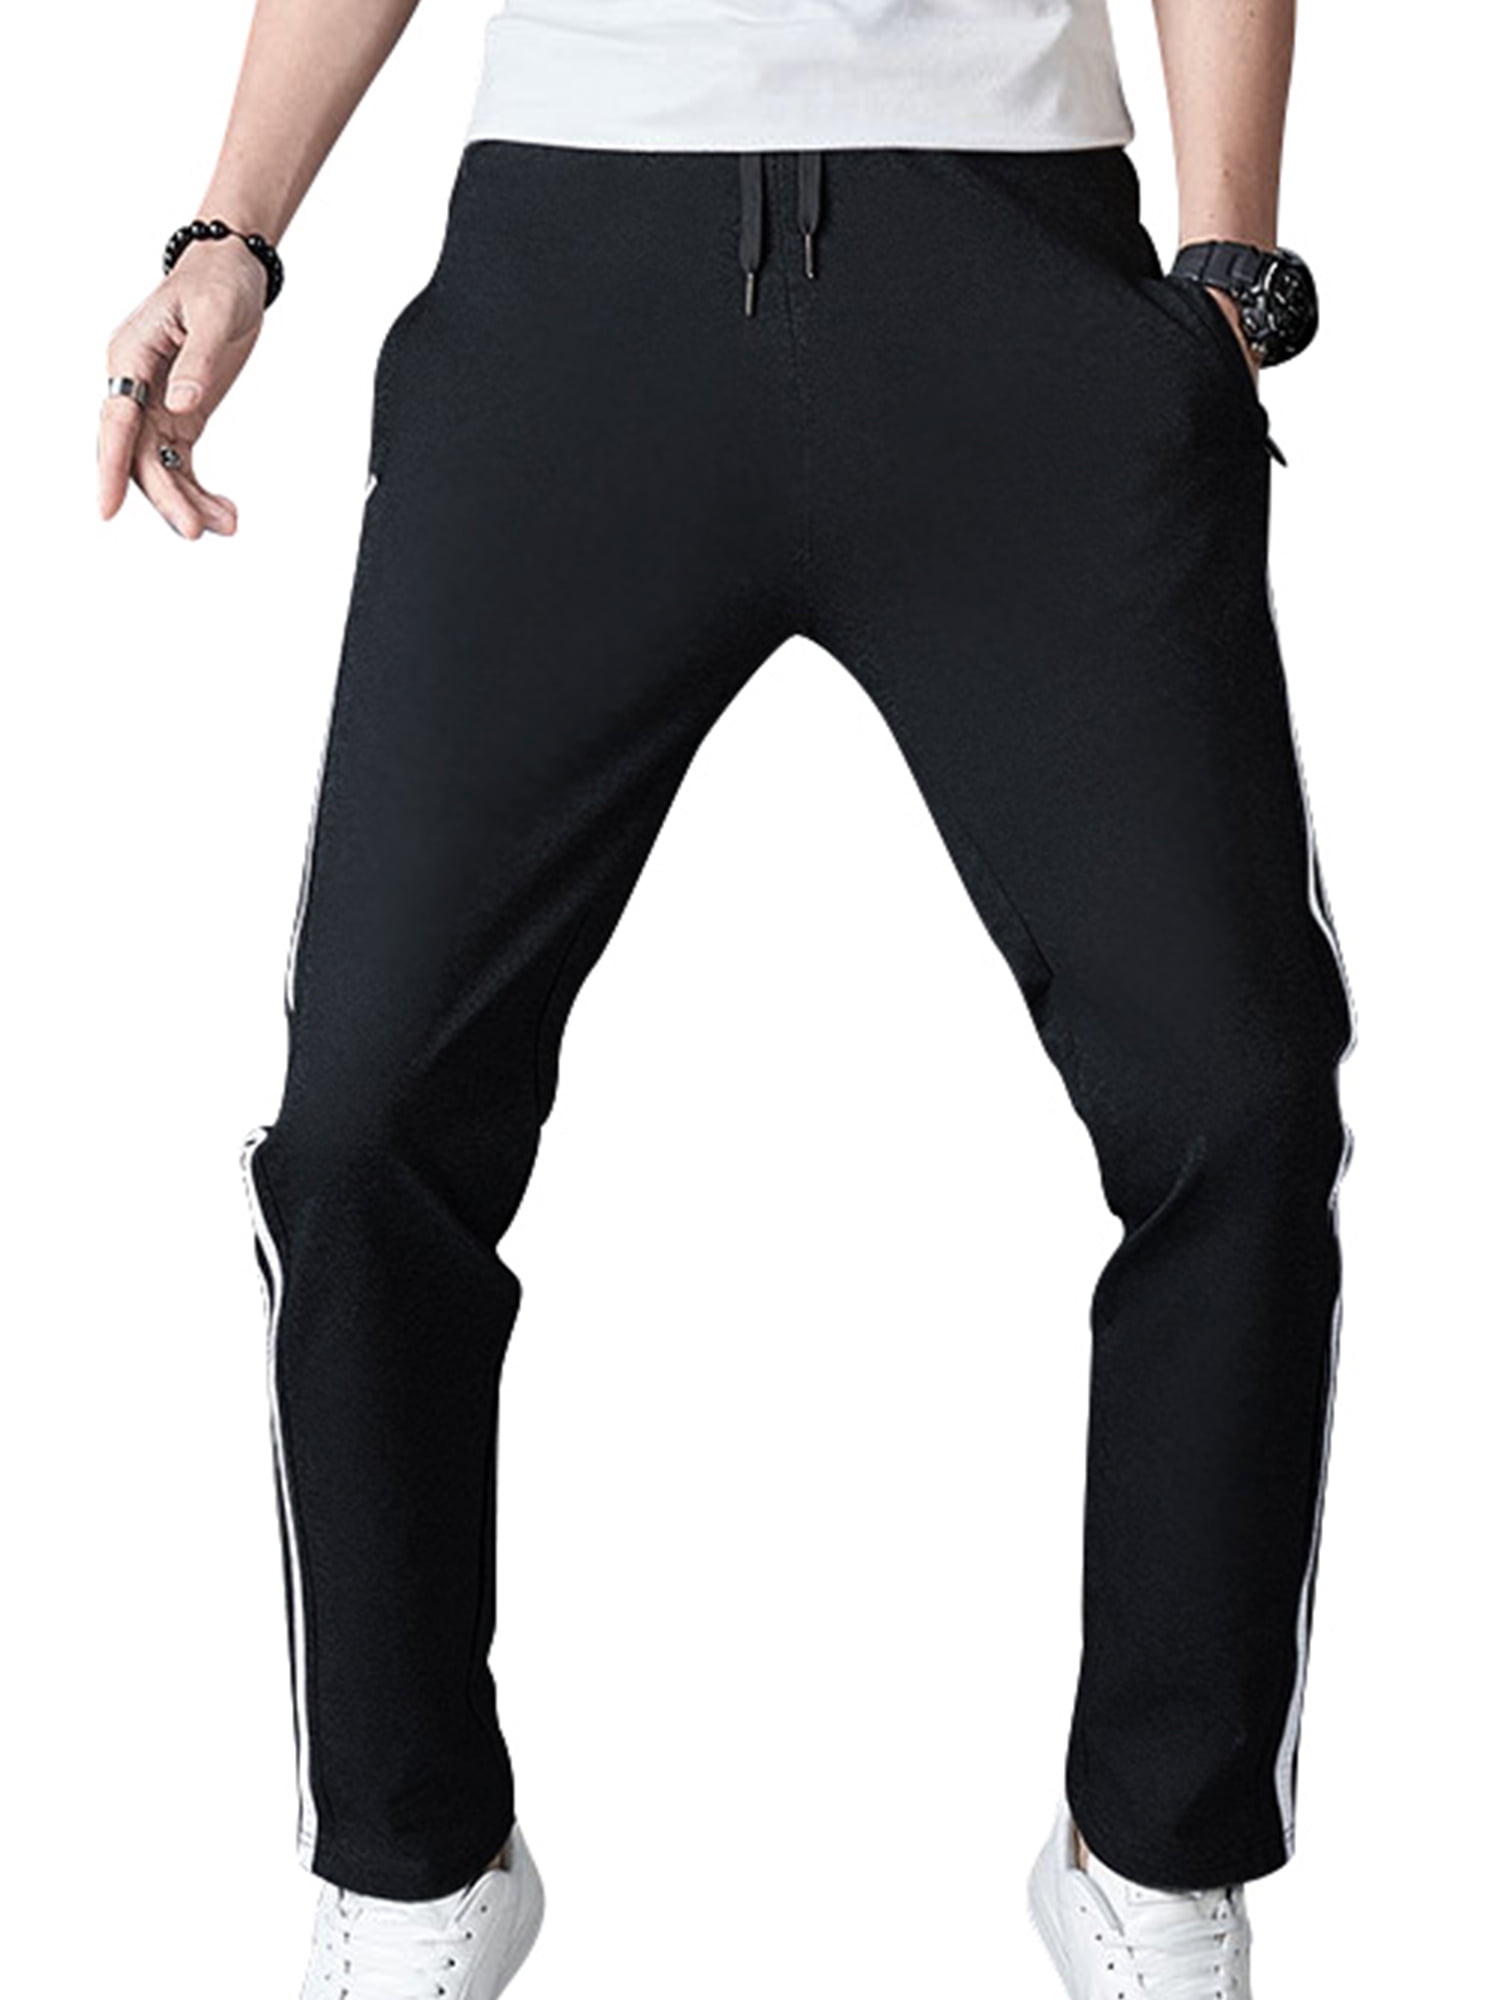 2020 New Men Joggers Male Sweatpants Zipper Pocket Trousers Casual Pants Gym